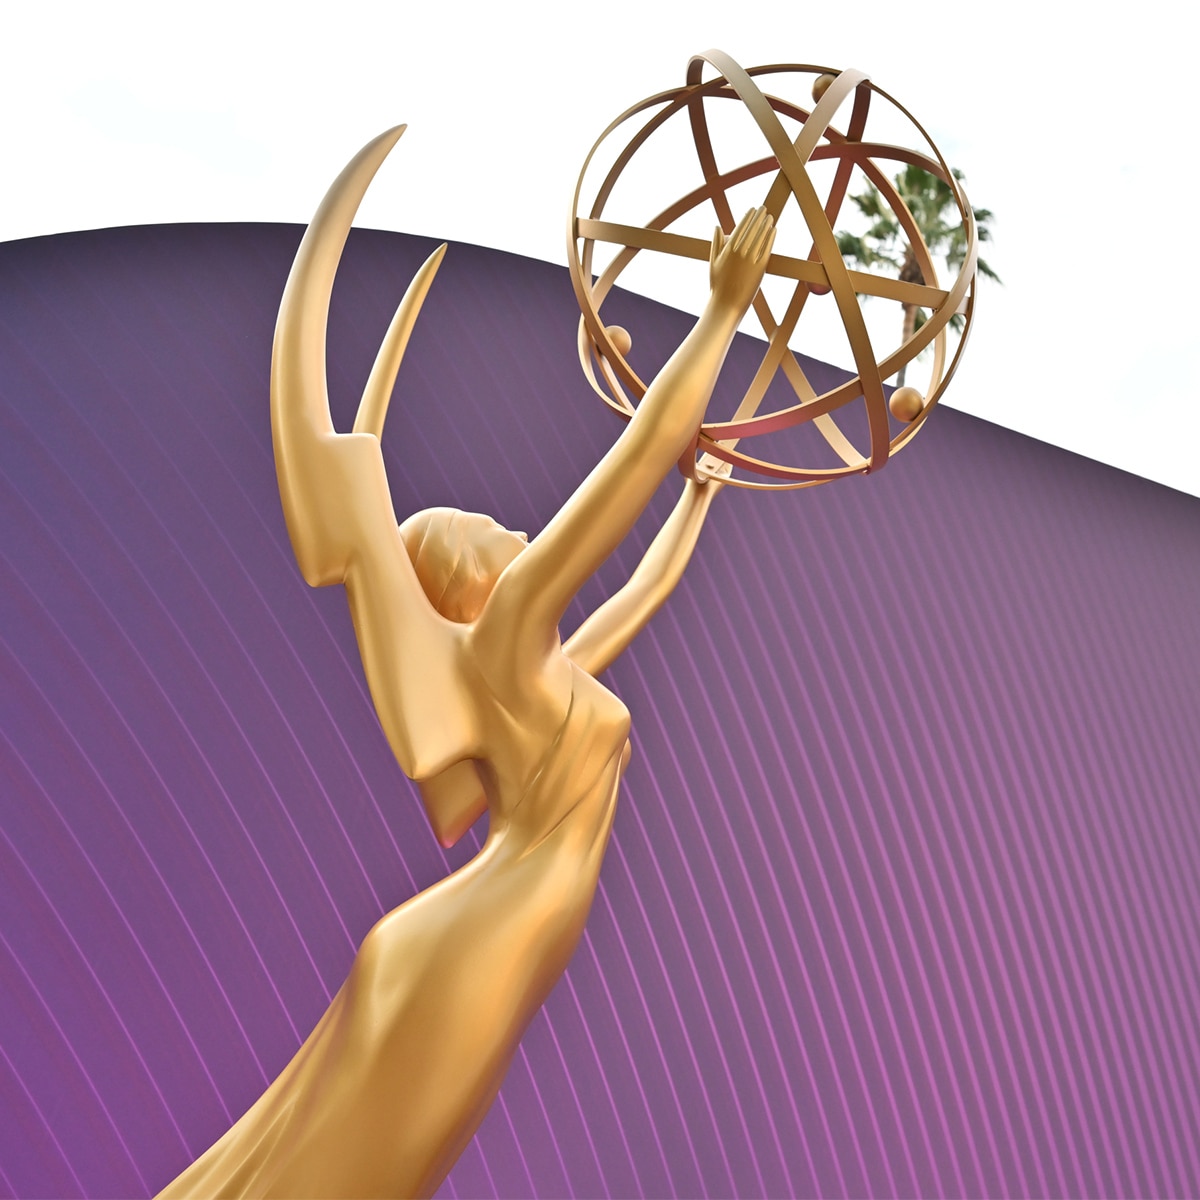 Emmy Awards, Emmys Statuette